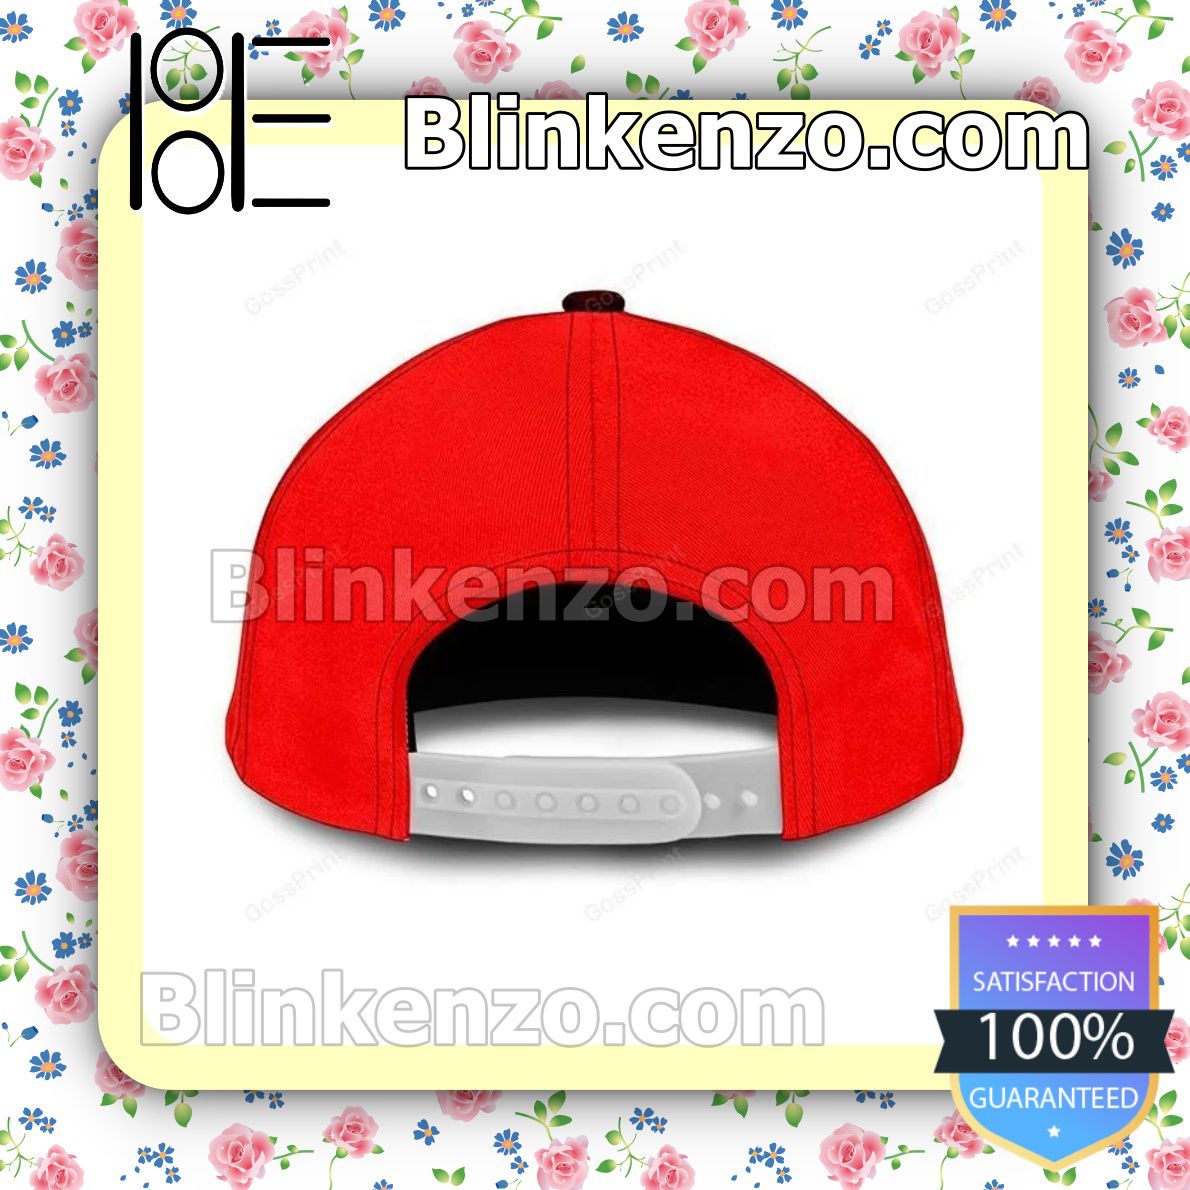 Buy In US Porsche 911 Red Baseball Caps Gift For Boyfriend